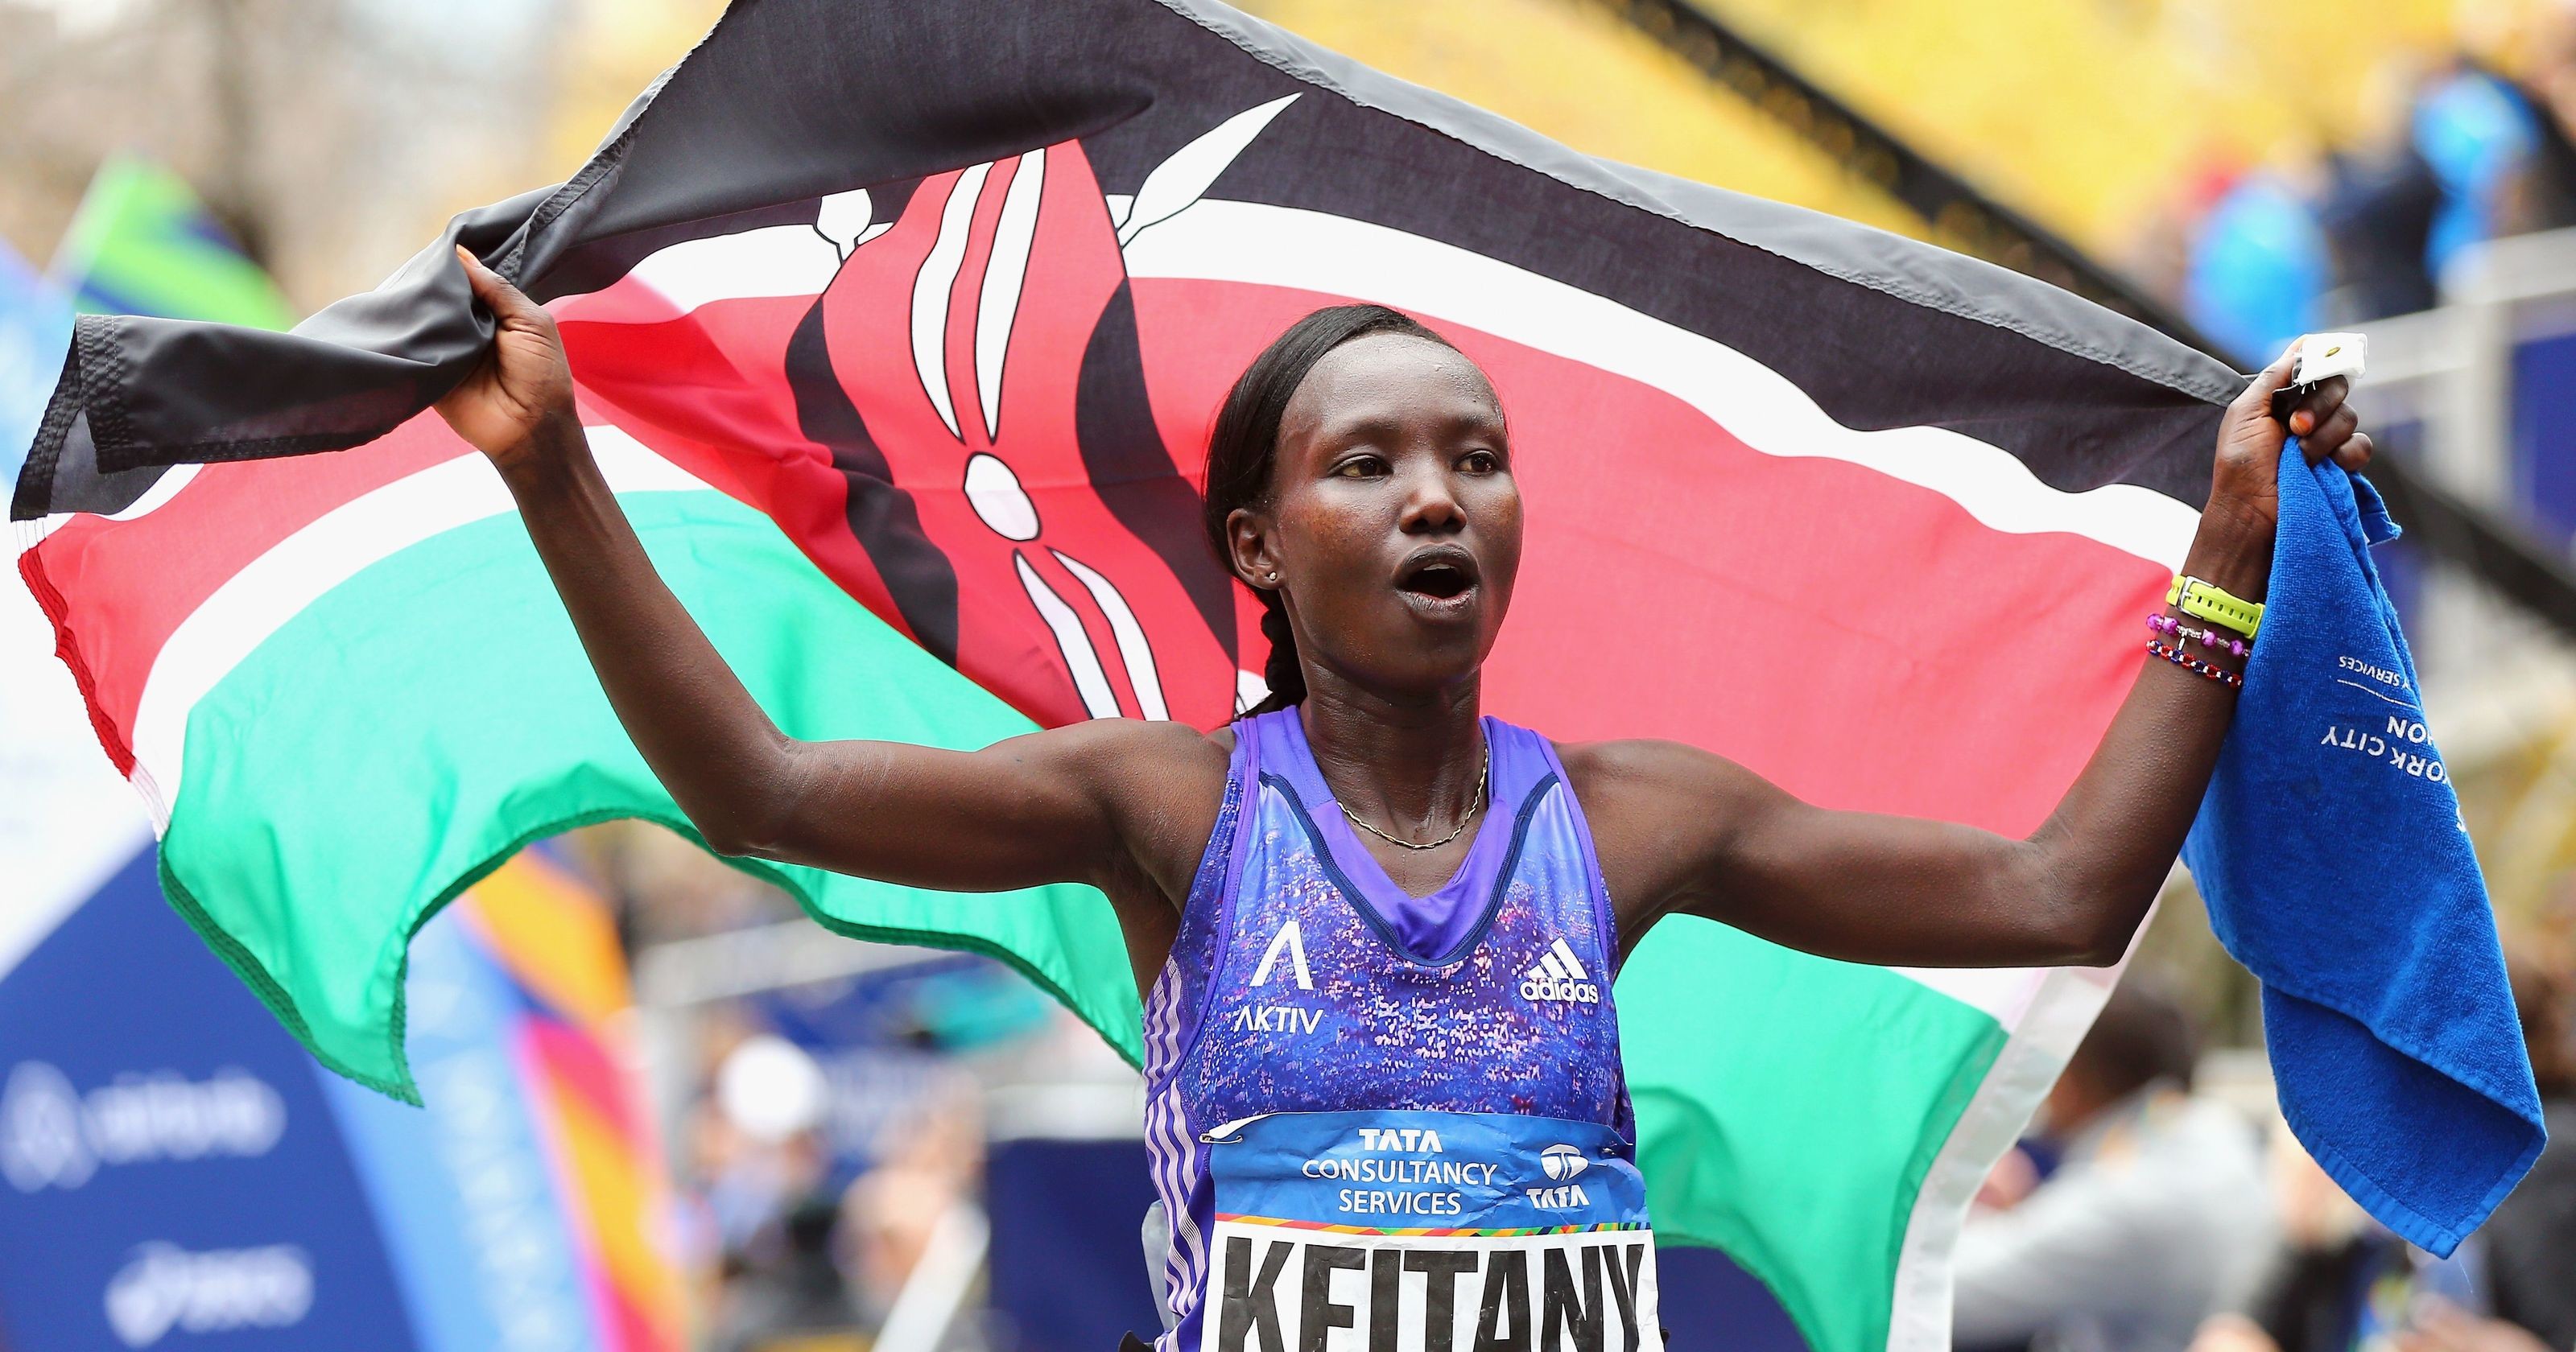 Mary Keitany has set her sights on breaking the world marathon record next year